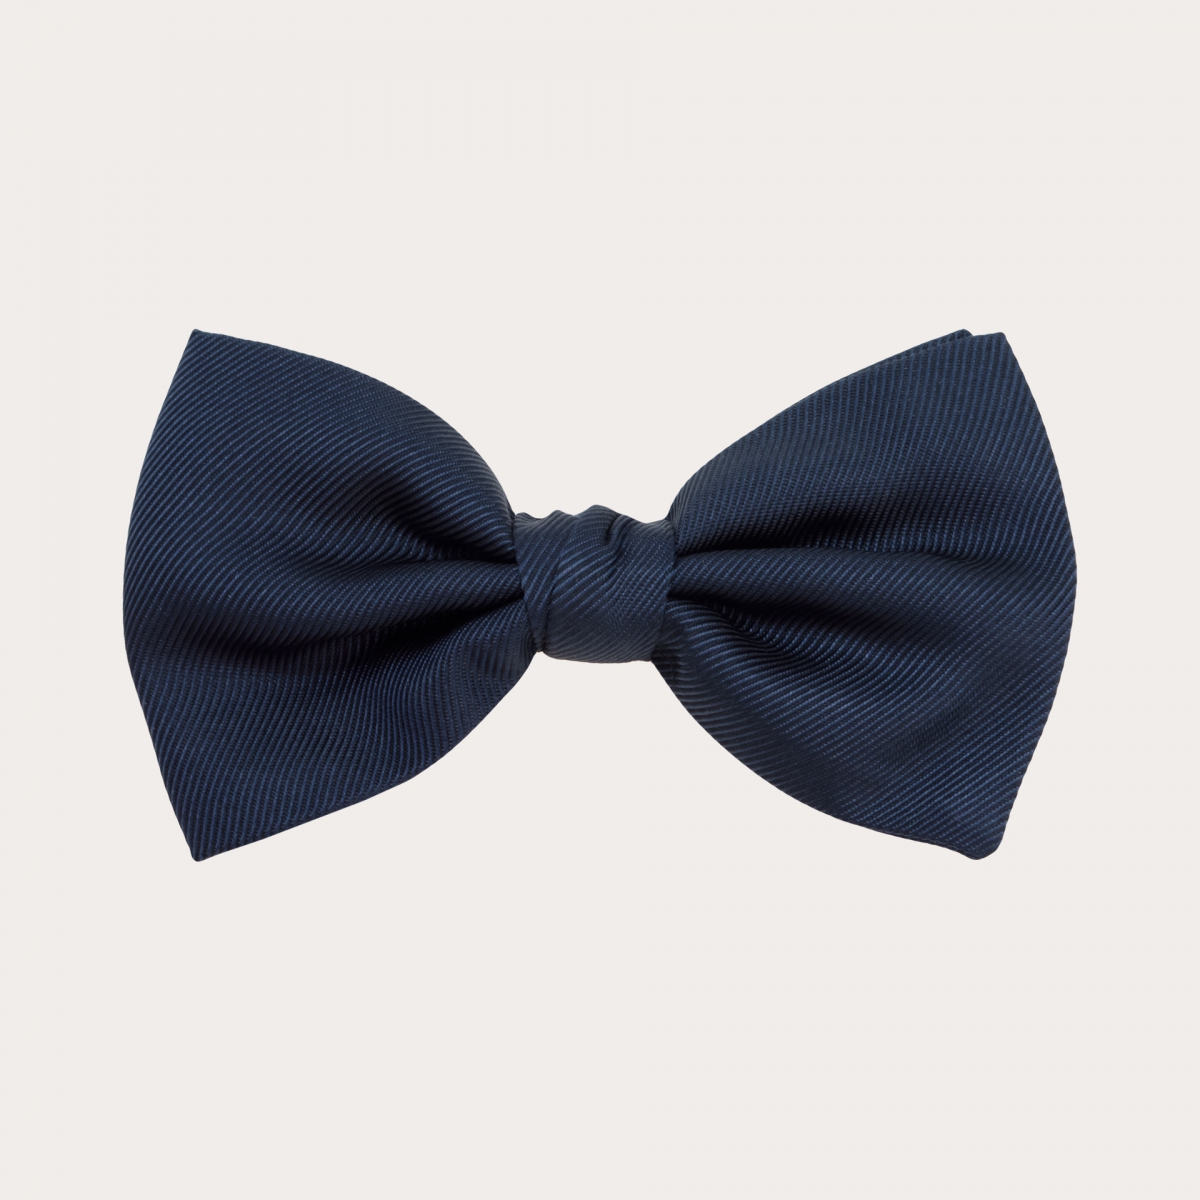 Silk Pre-tied Bow Tie blue navy